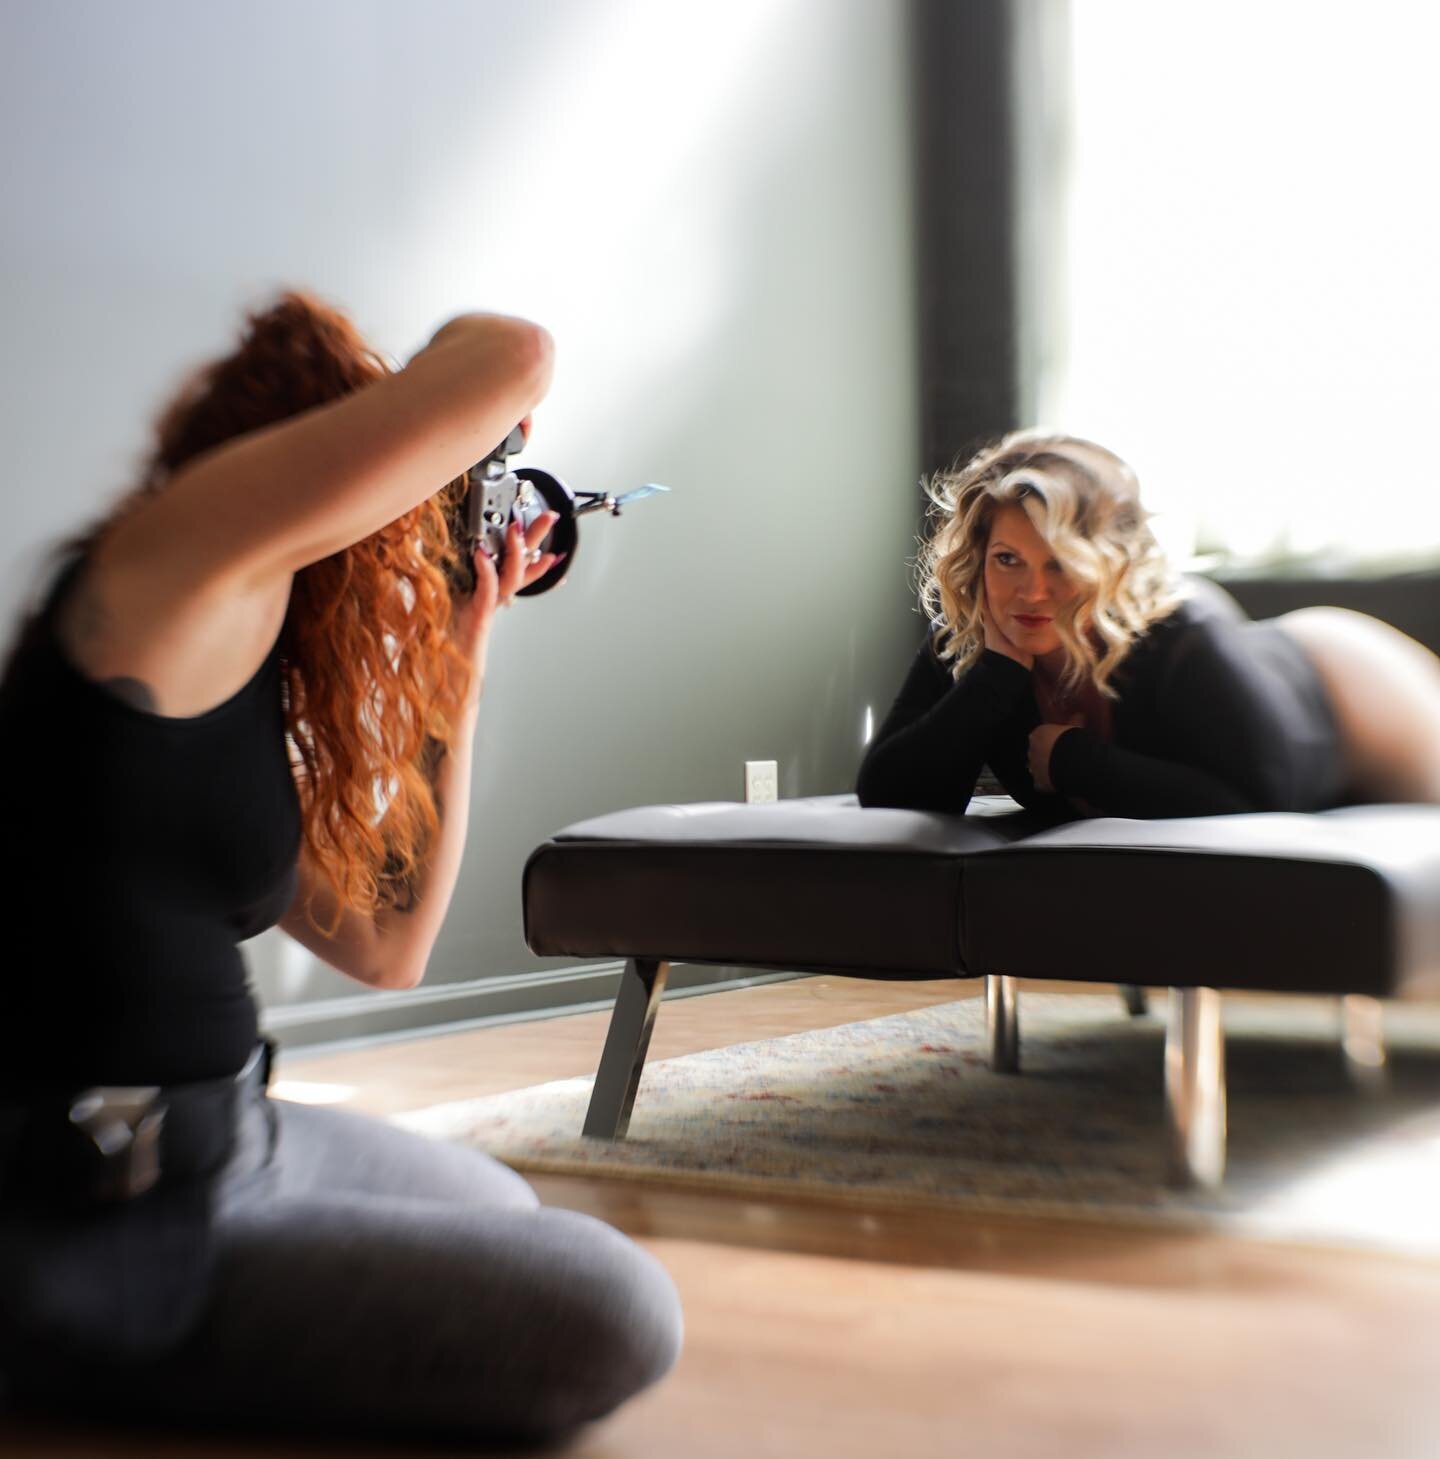 Indoor boudoir session by Carrie Roseman, best boudoir photographer in CT